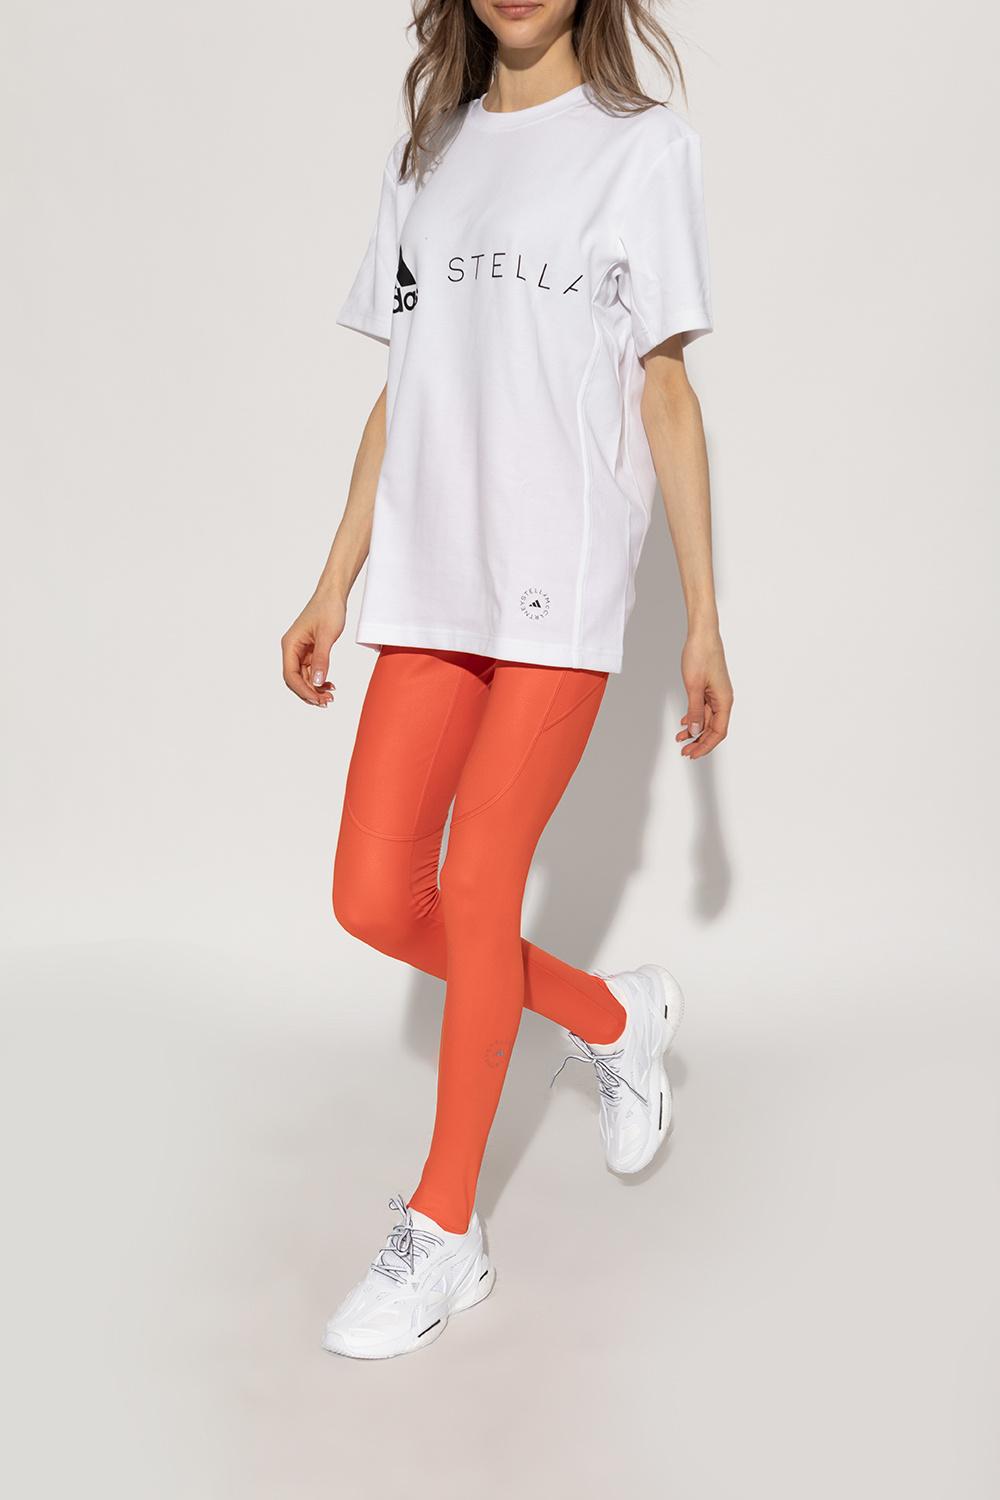 adidas by Stella McCartney Women's Solarglide Low Top Sneakers